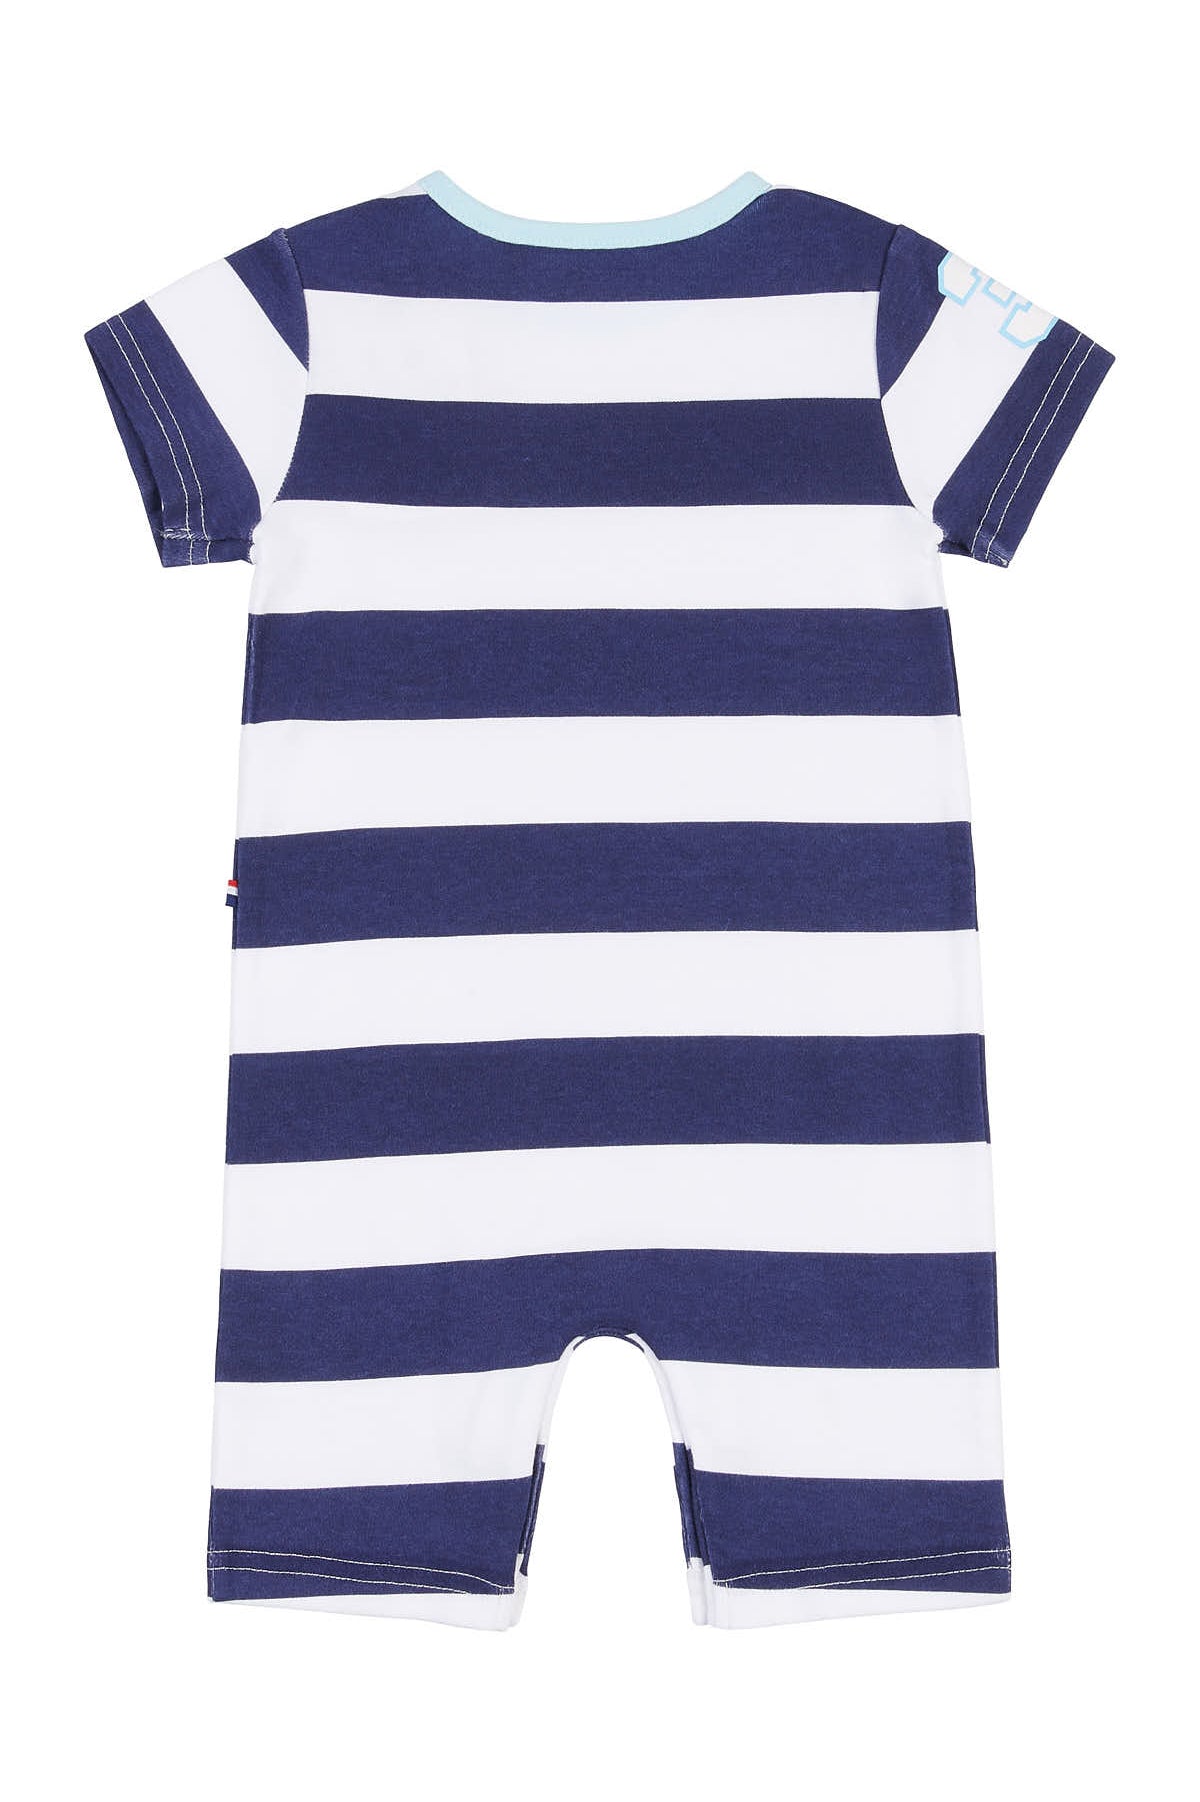 Baby Rugby Stripe Romper in Navy Blue